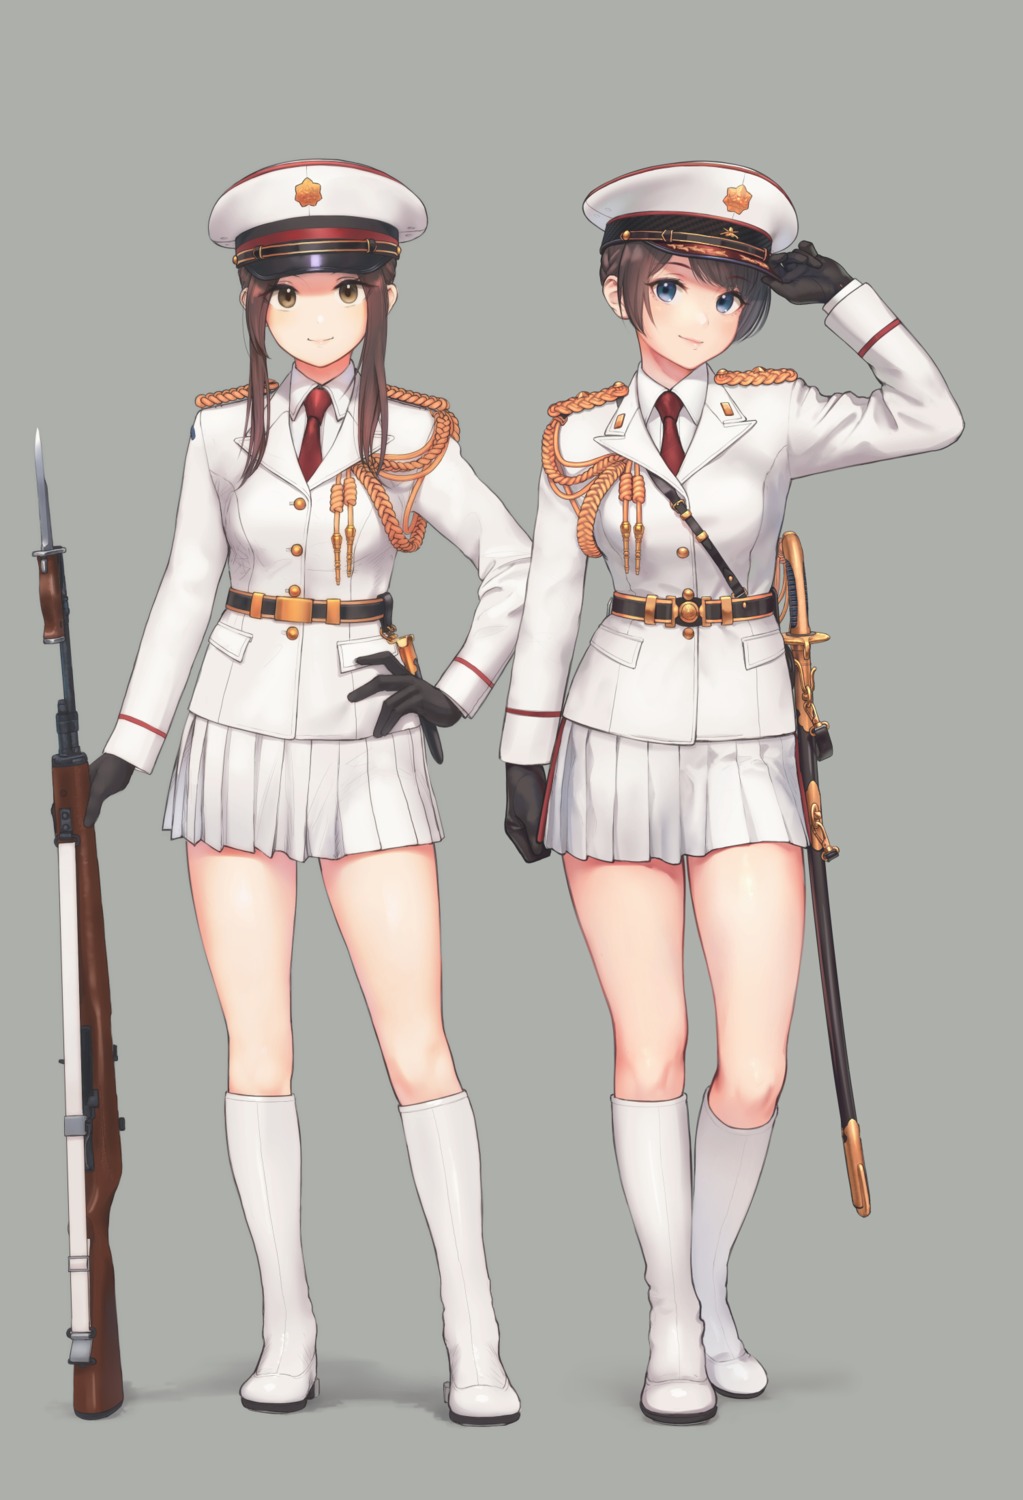 genso gun sword uniform